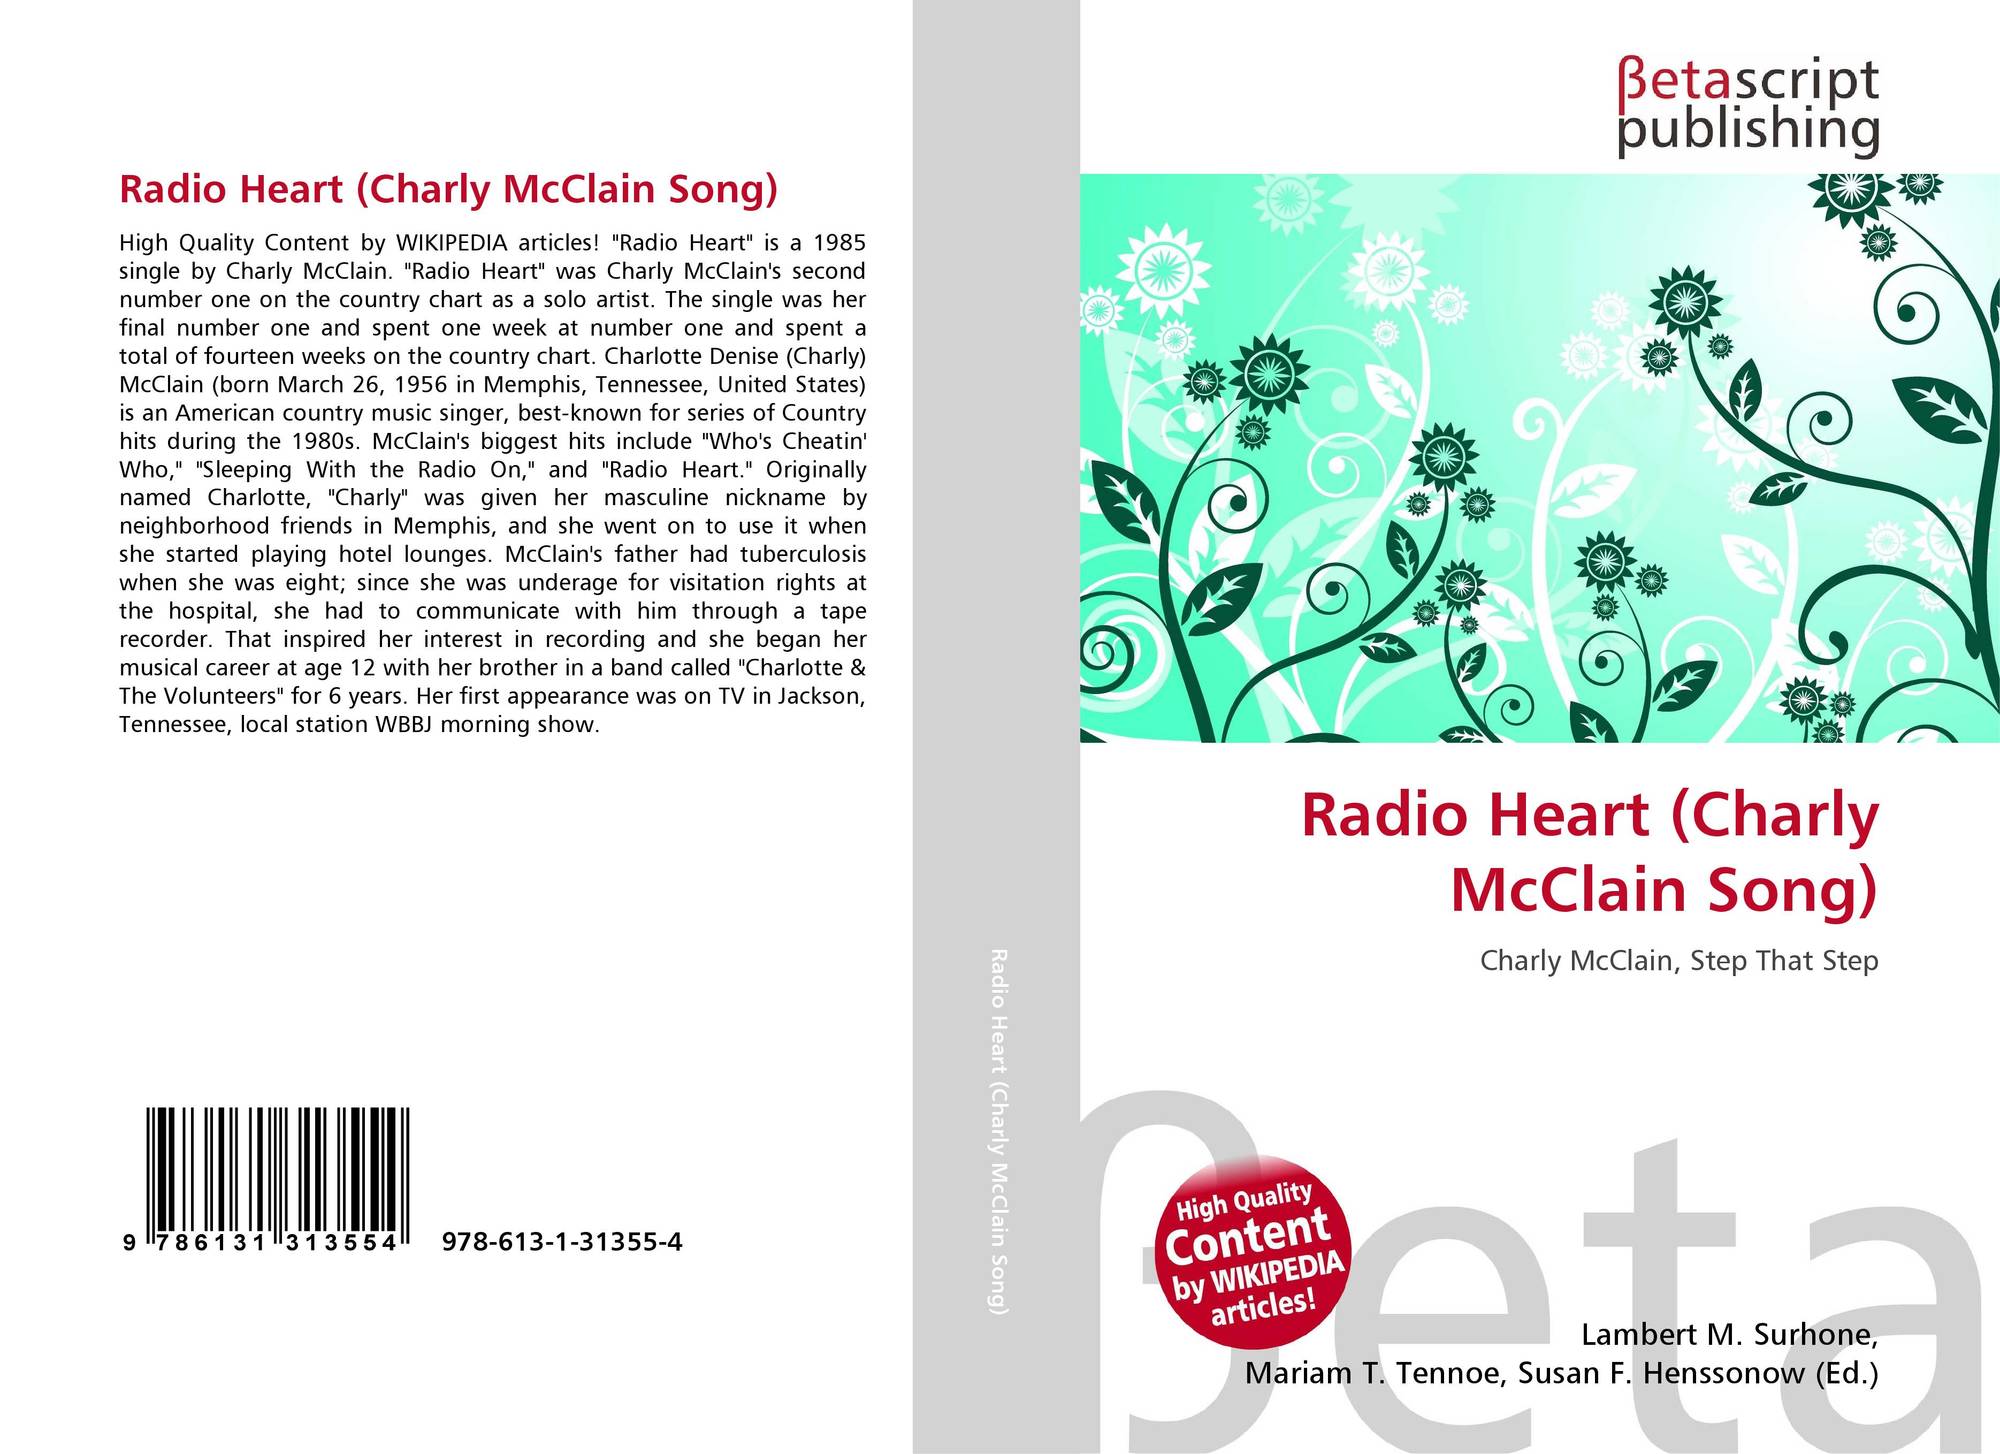 charly mcclain radio heart